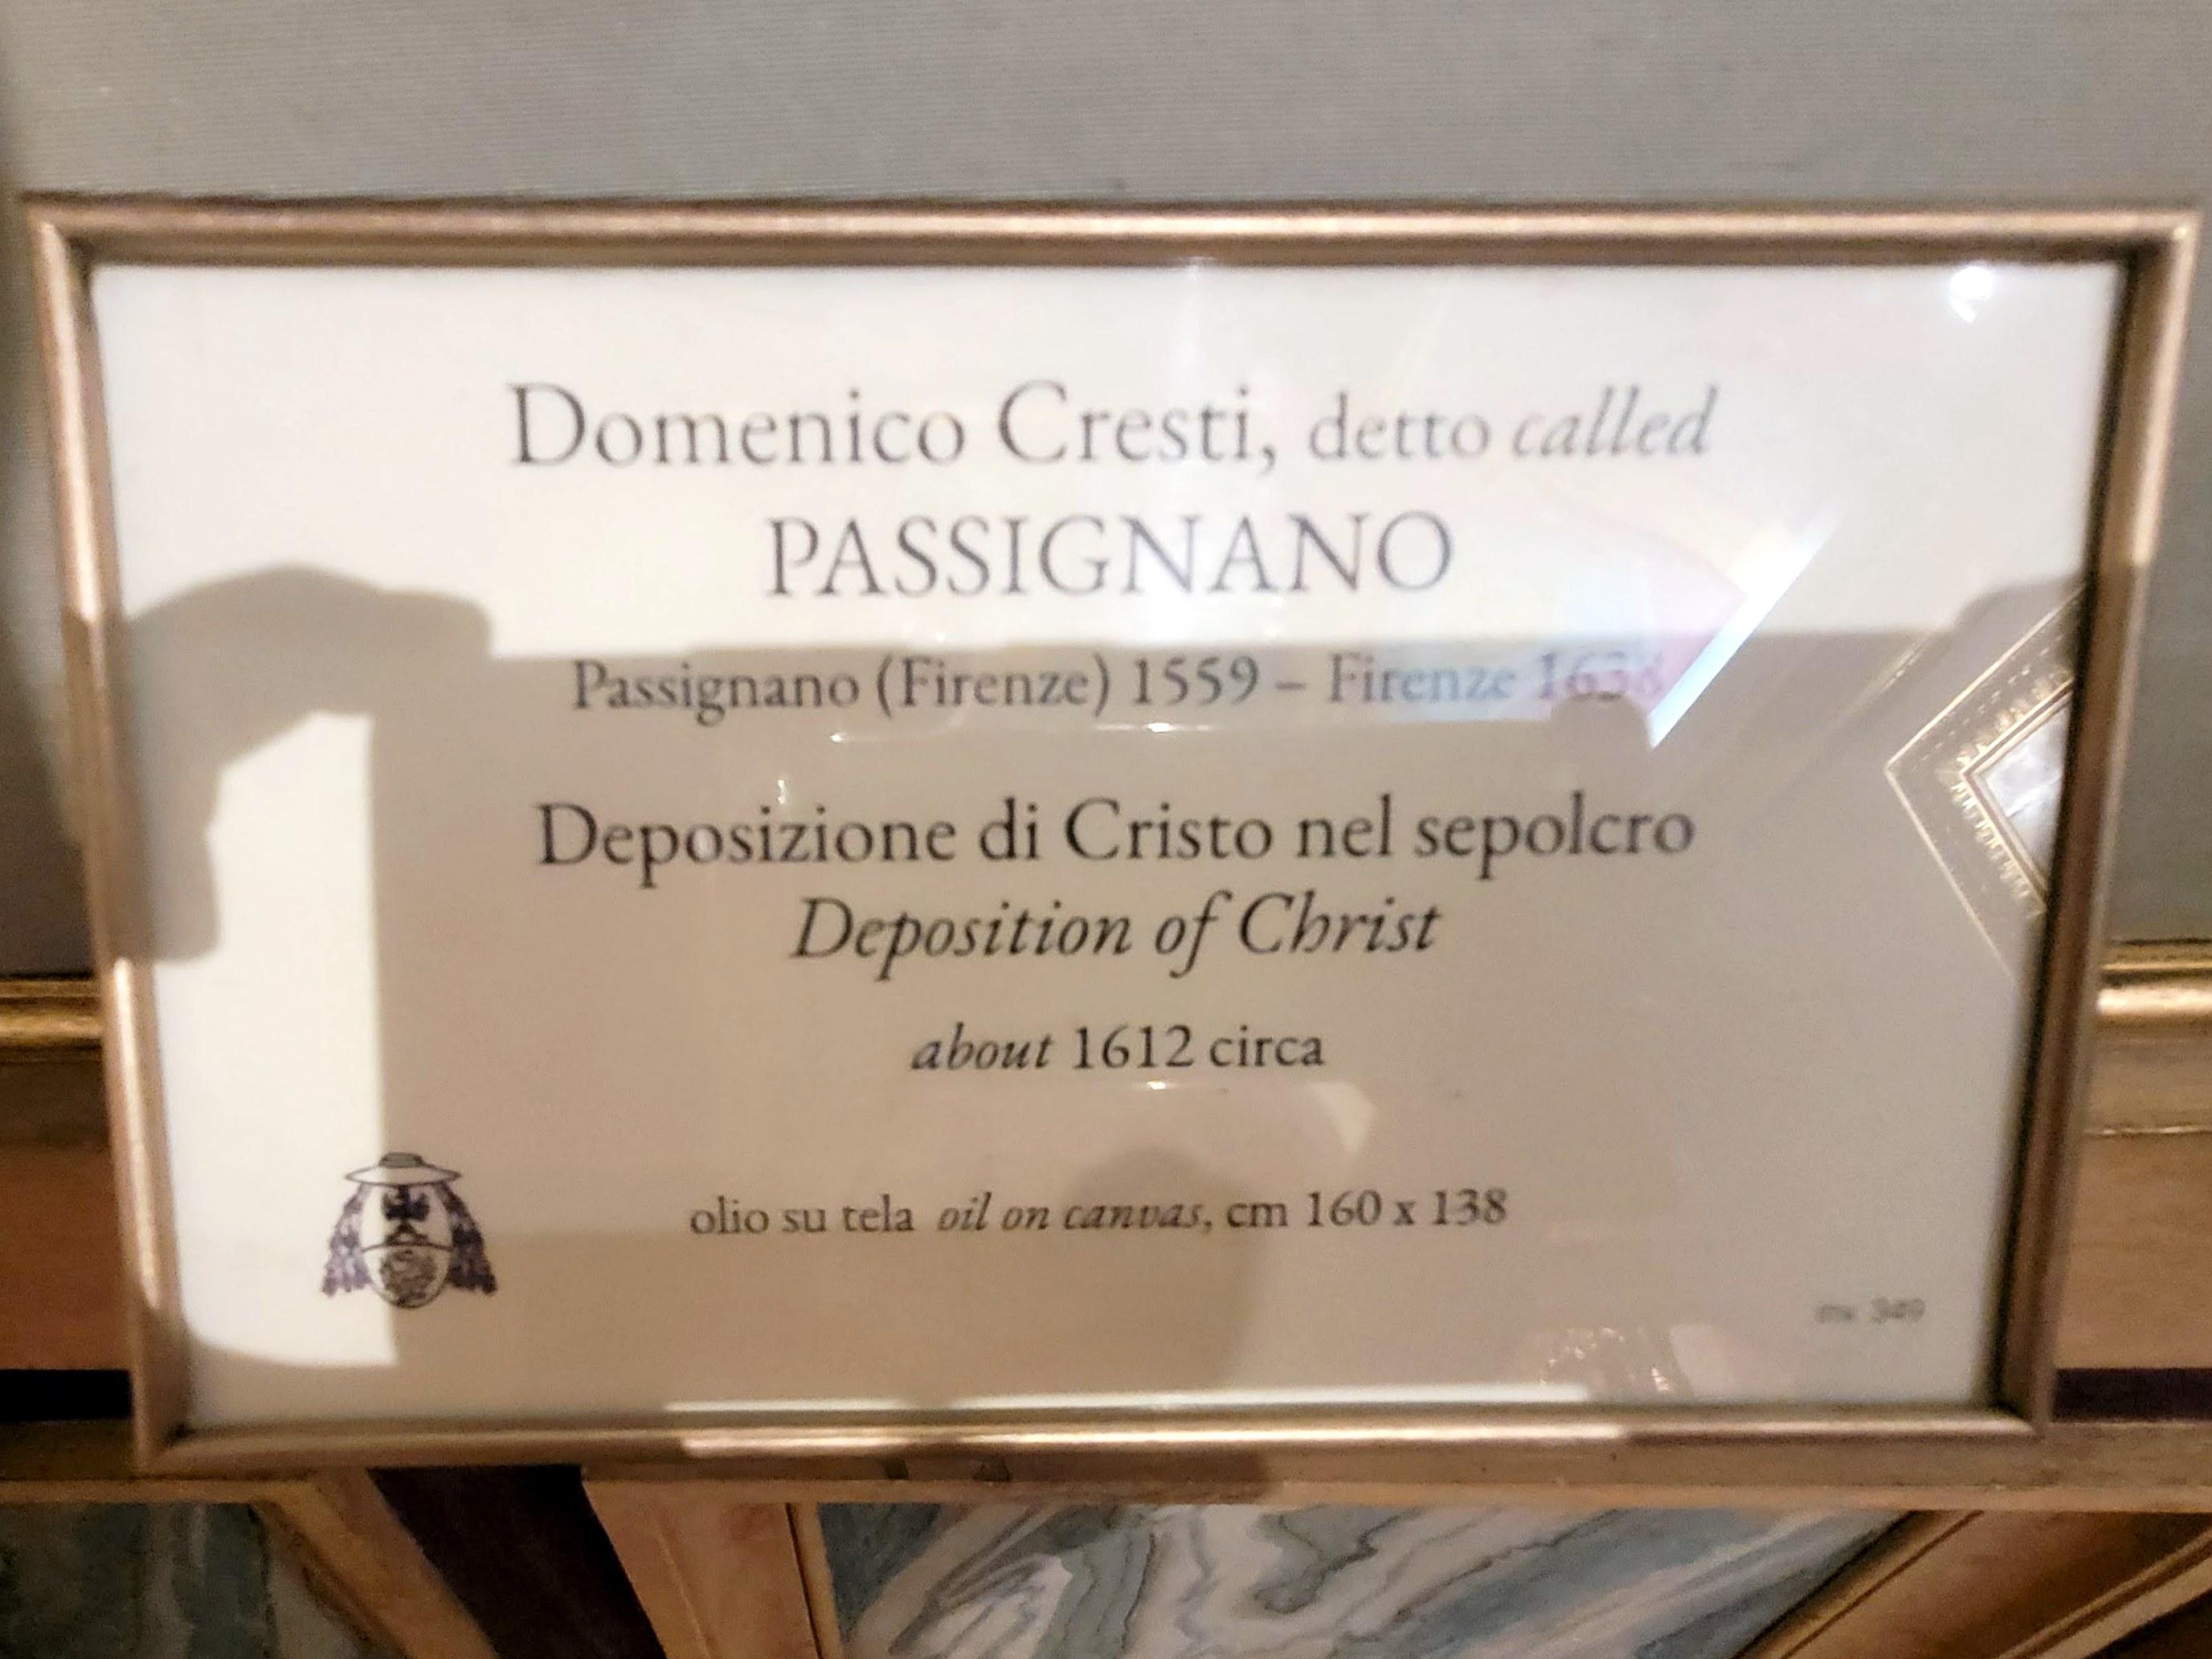 Domenico Cresti (Passignano) (1612), Grablegung Christi, Rom, Villa Borghese, Galleria Borghese, um 1612, Bild 2/2